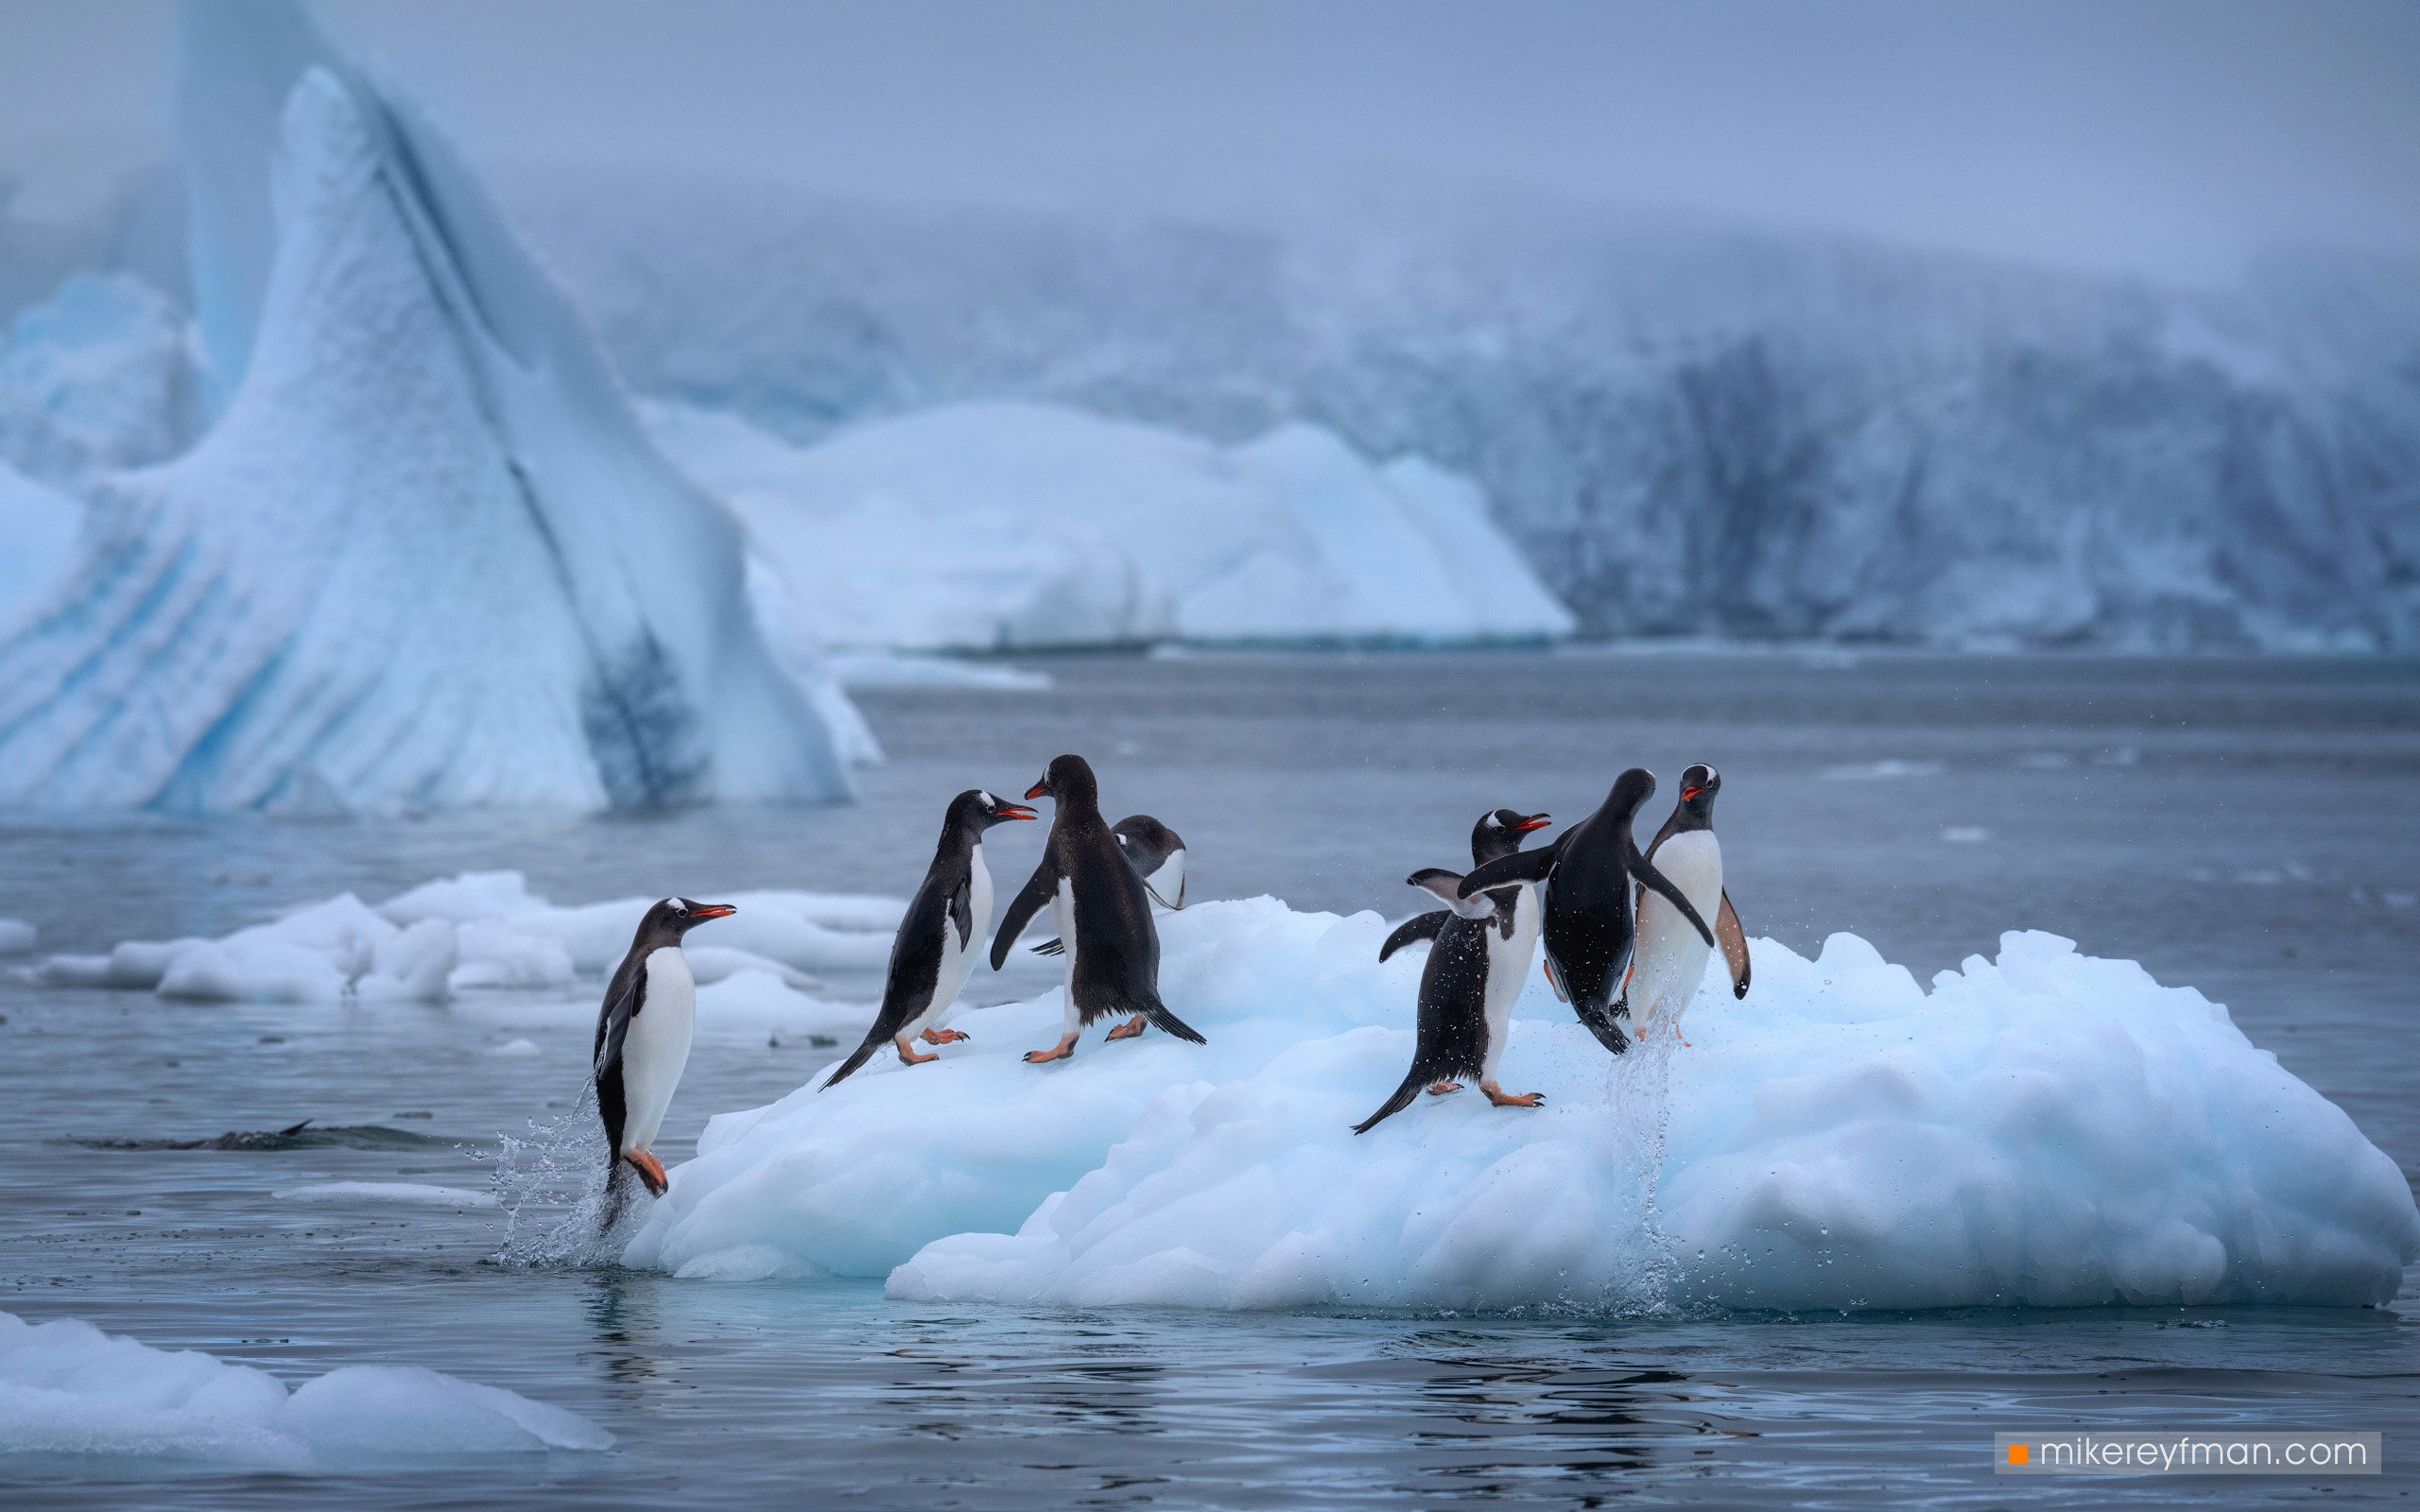 gentoo penguins, errera channel, cuverville island, antarctic, antarctica, ice, iceberg, arch, cold, romantic, polar climate, Майк Рейфман